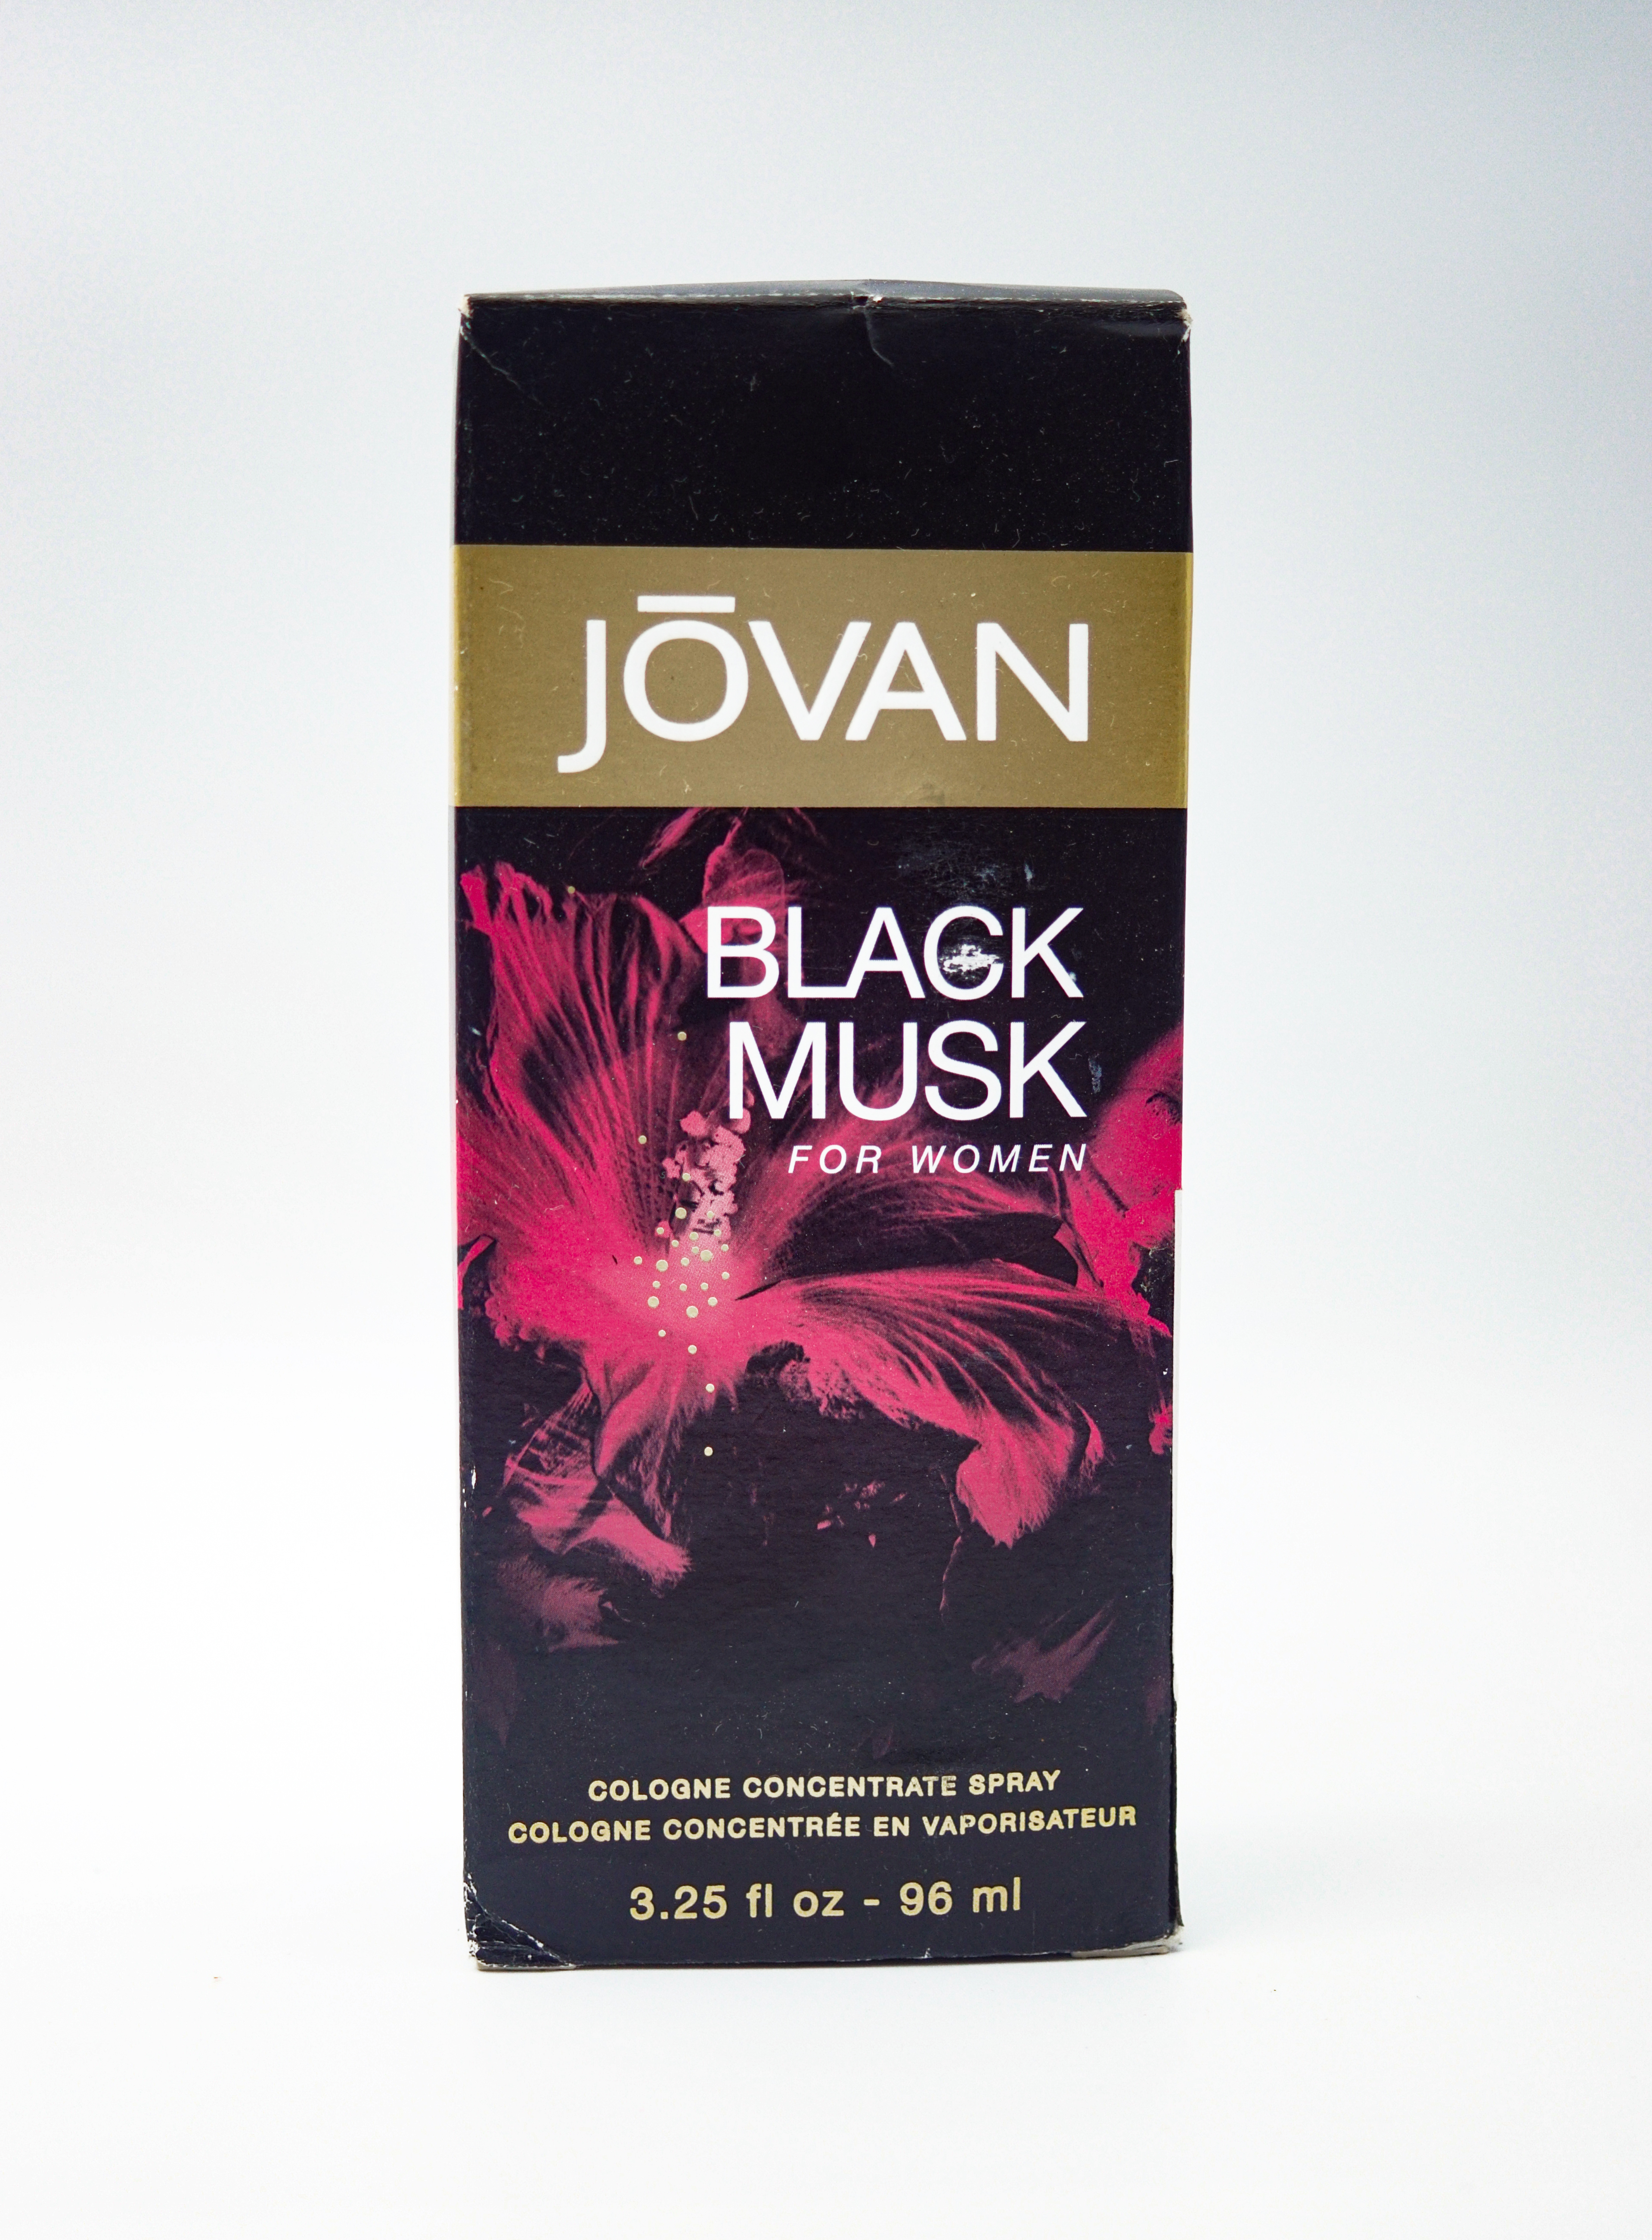 Jovan Black Musk 96 ml Cologne Concentree En Vaporisateur Spray  Perfume For Women SKU 96850